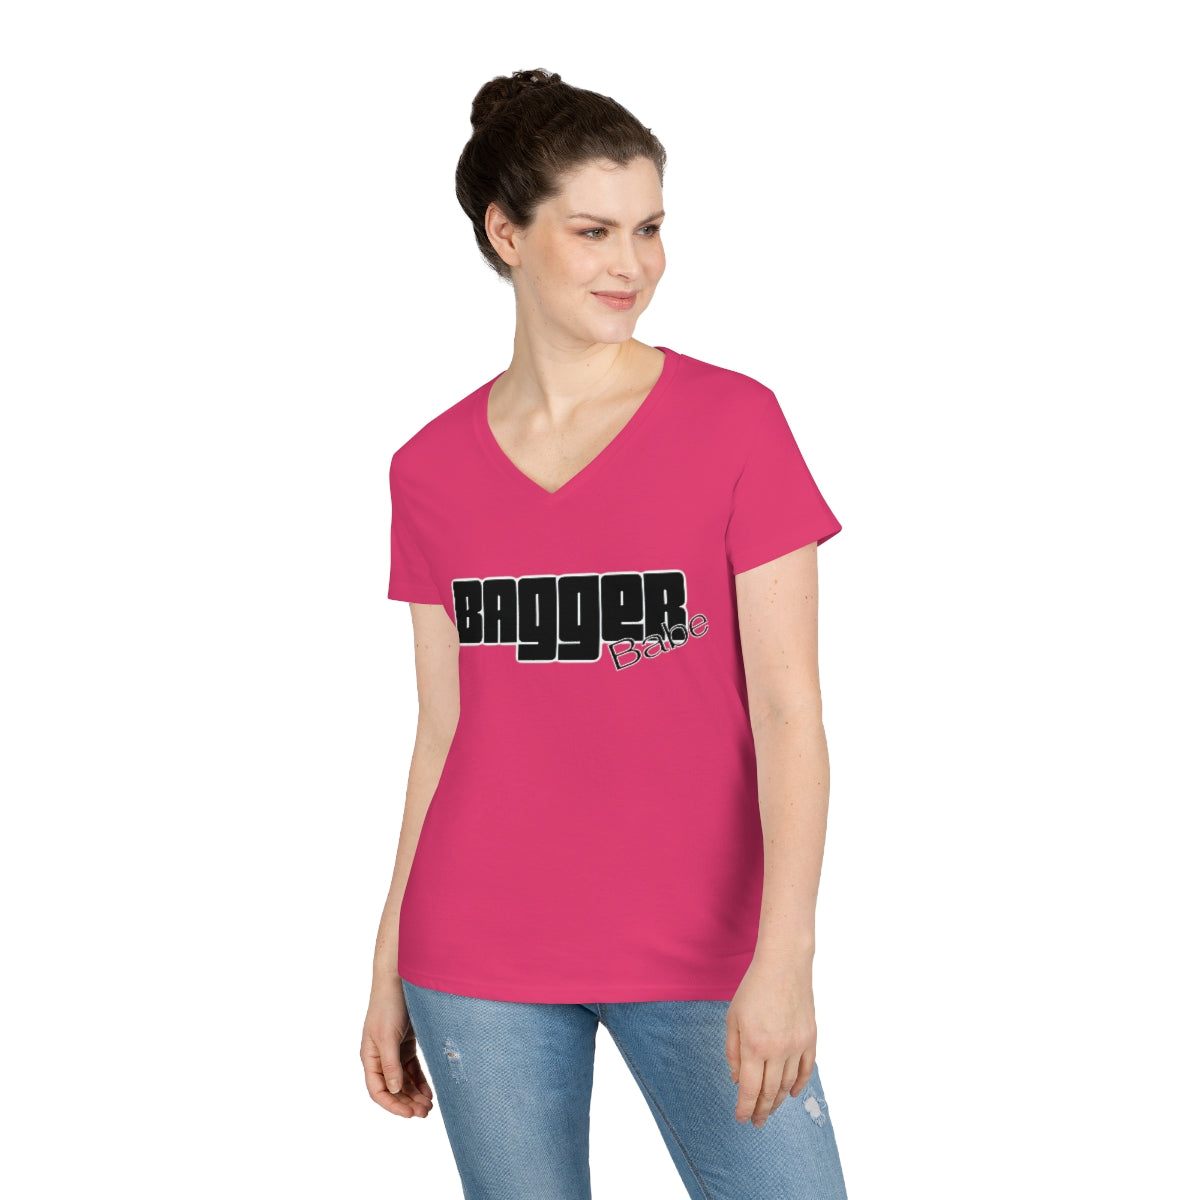 Ladies' V-Neck Bagger Babe T-Shirt (Black Letters)